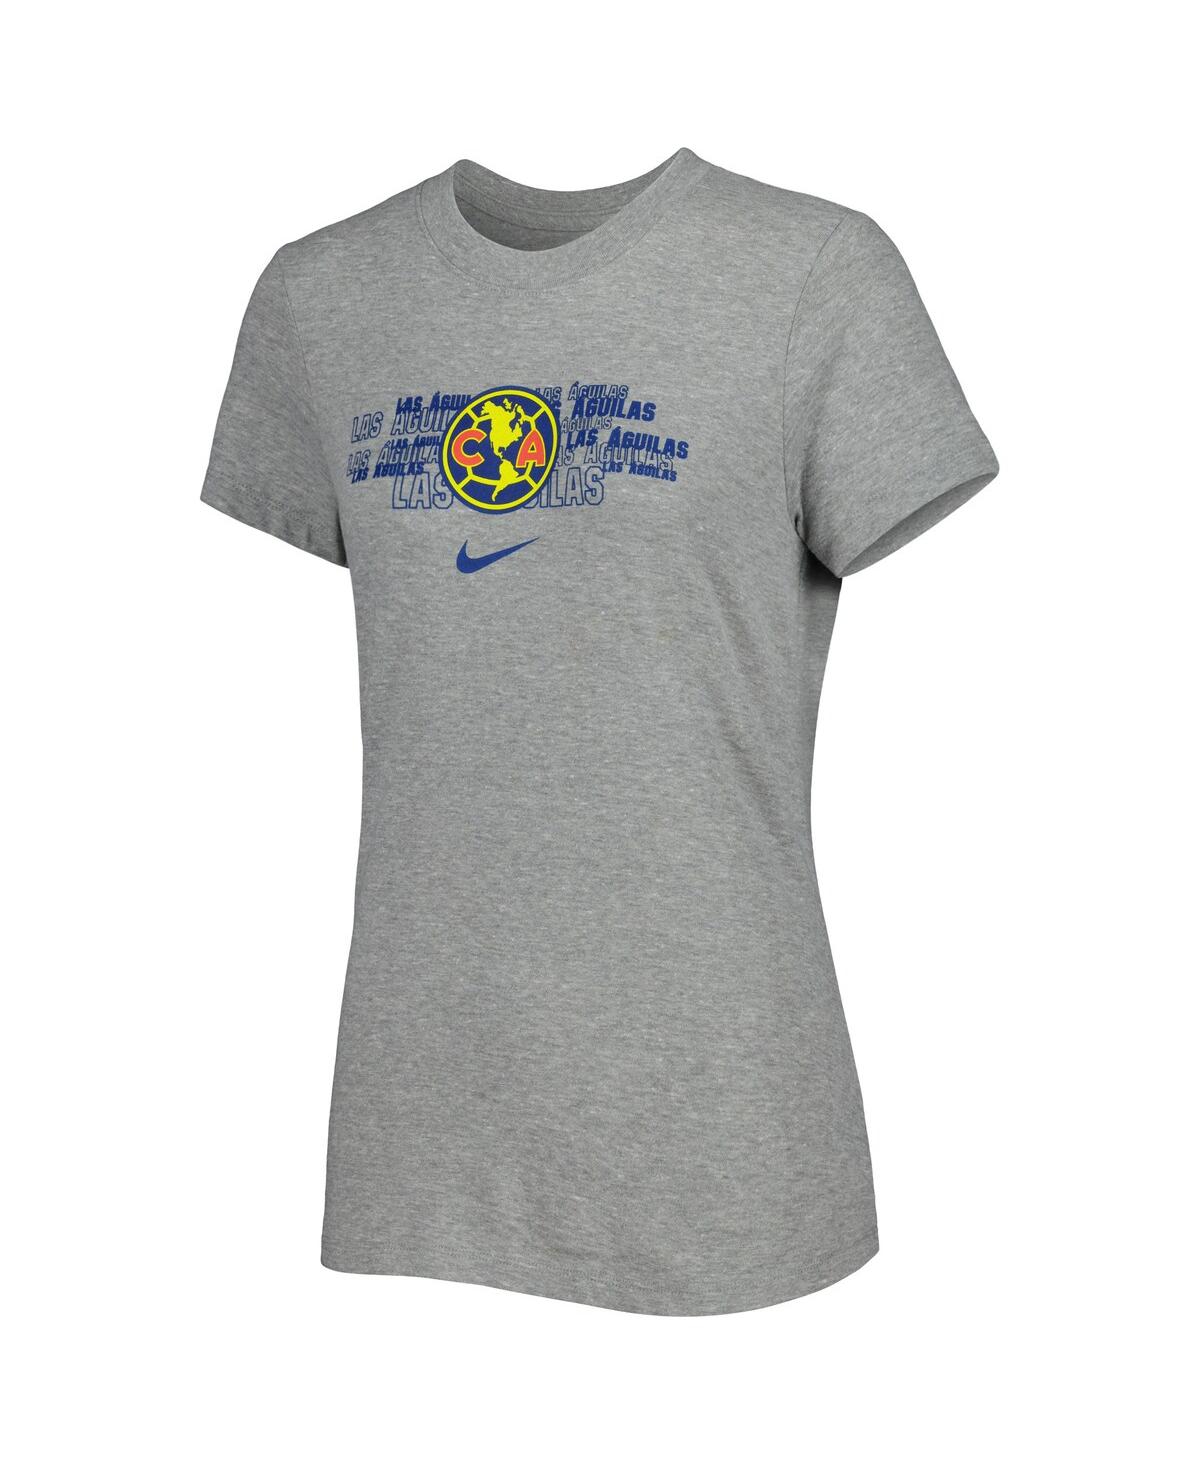 Men's Nike Anthracite St. Louis Cardinals Legend Icon Performance T-Shirt